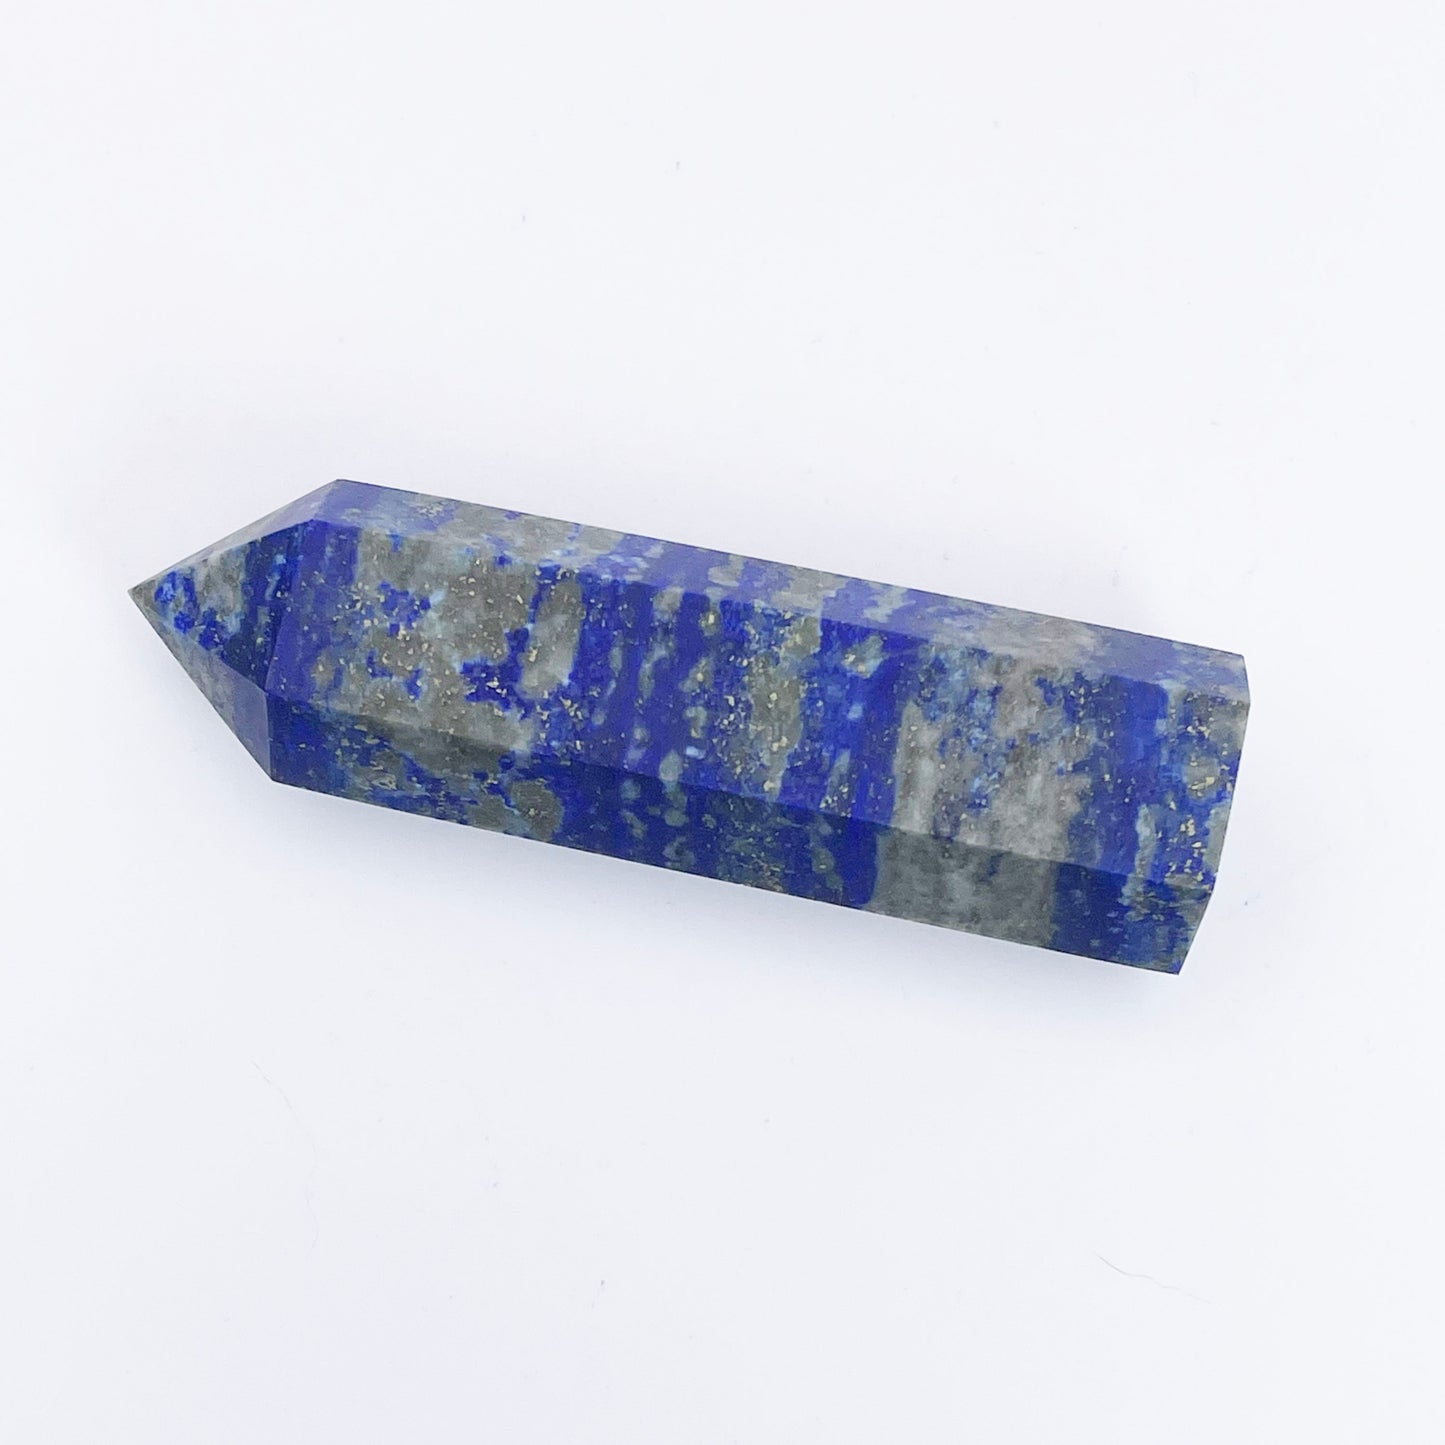 Lapis Lazuli Tower Point Crystal 6-7 cm